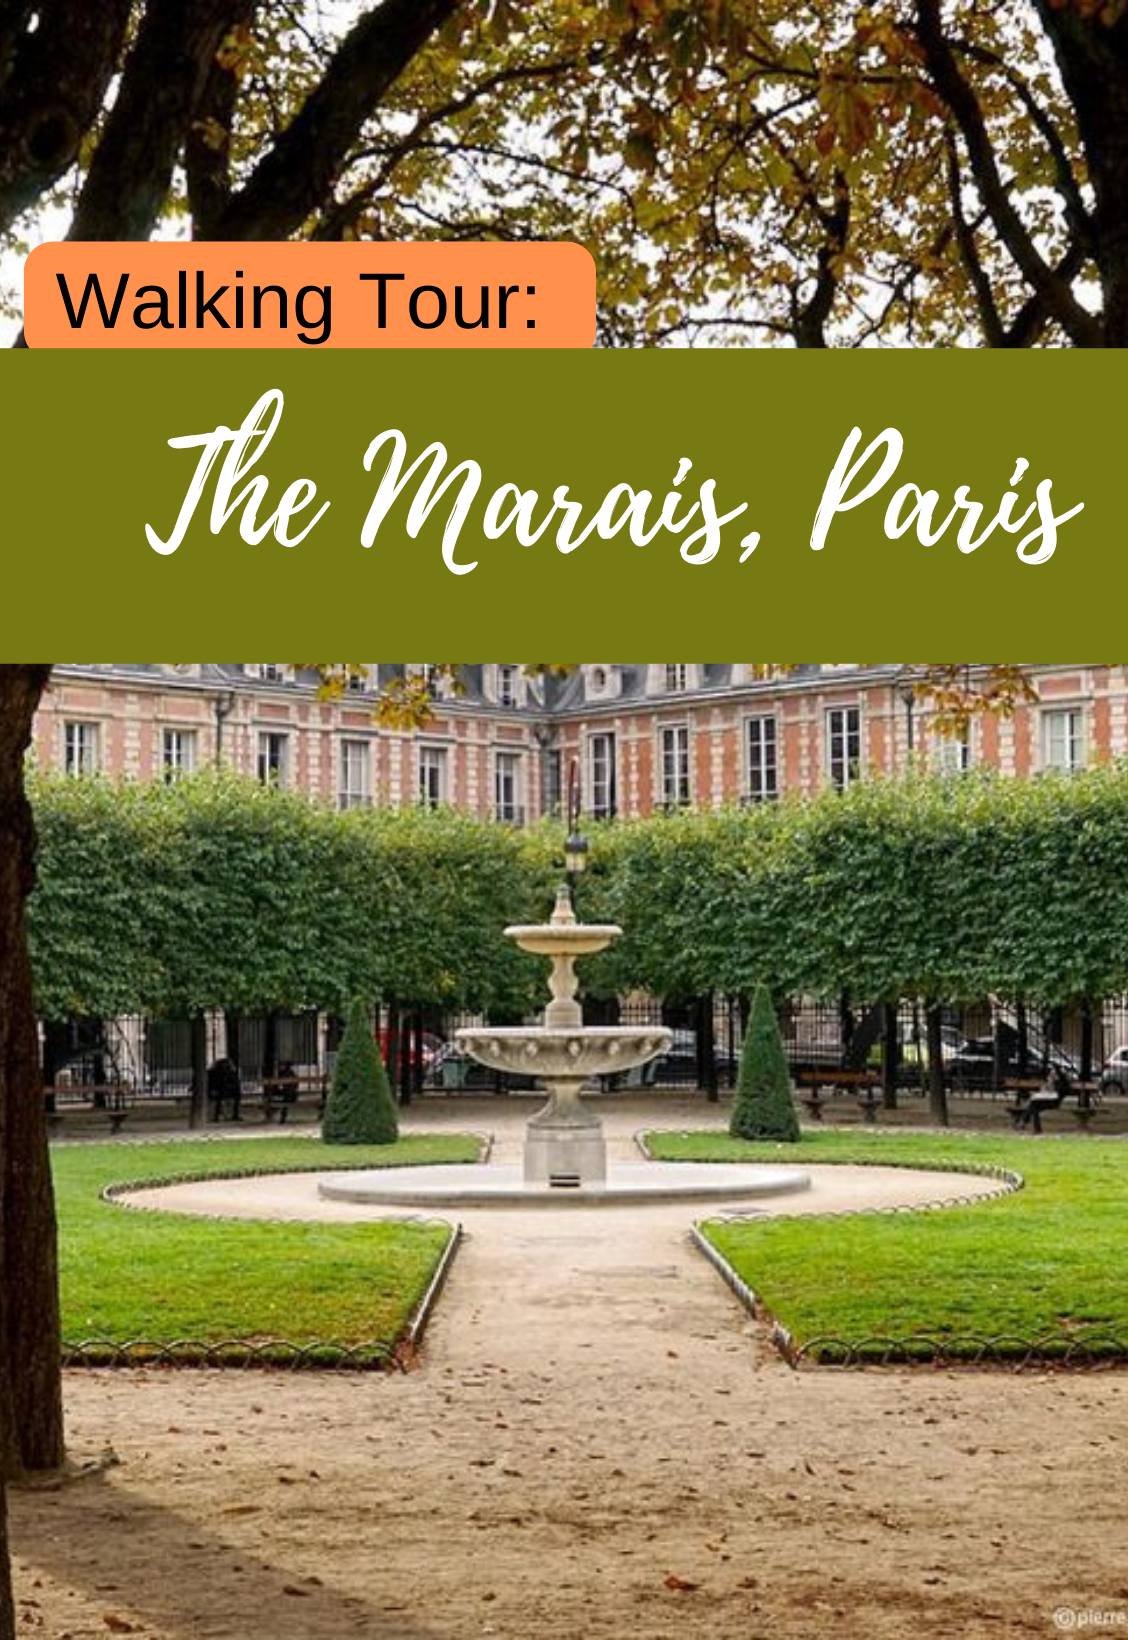 Walking Tour: The Marais, Paris